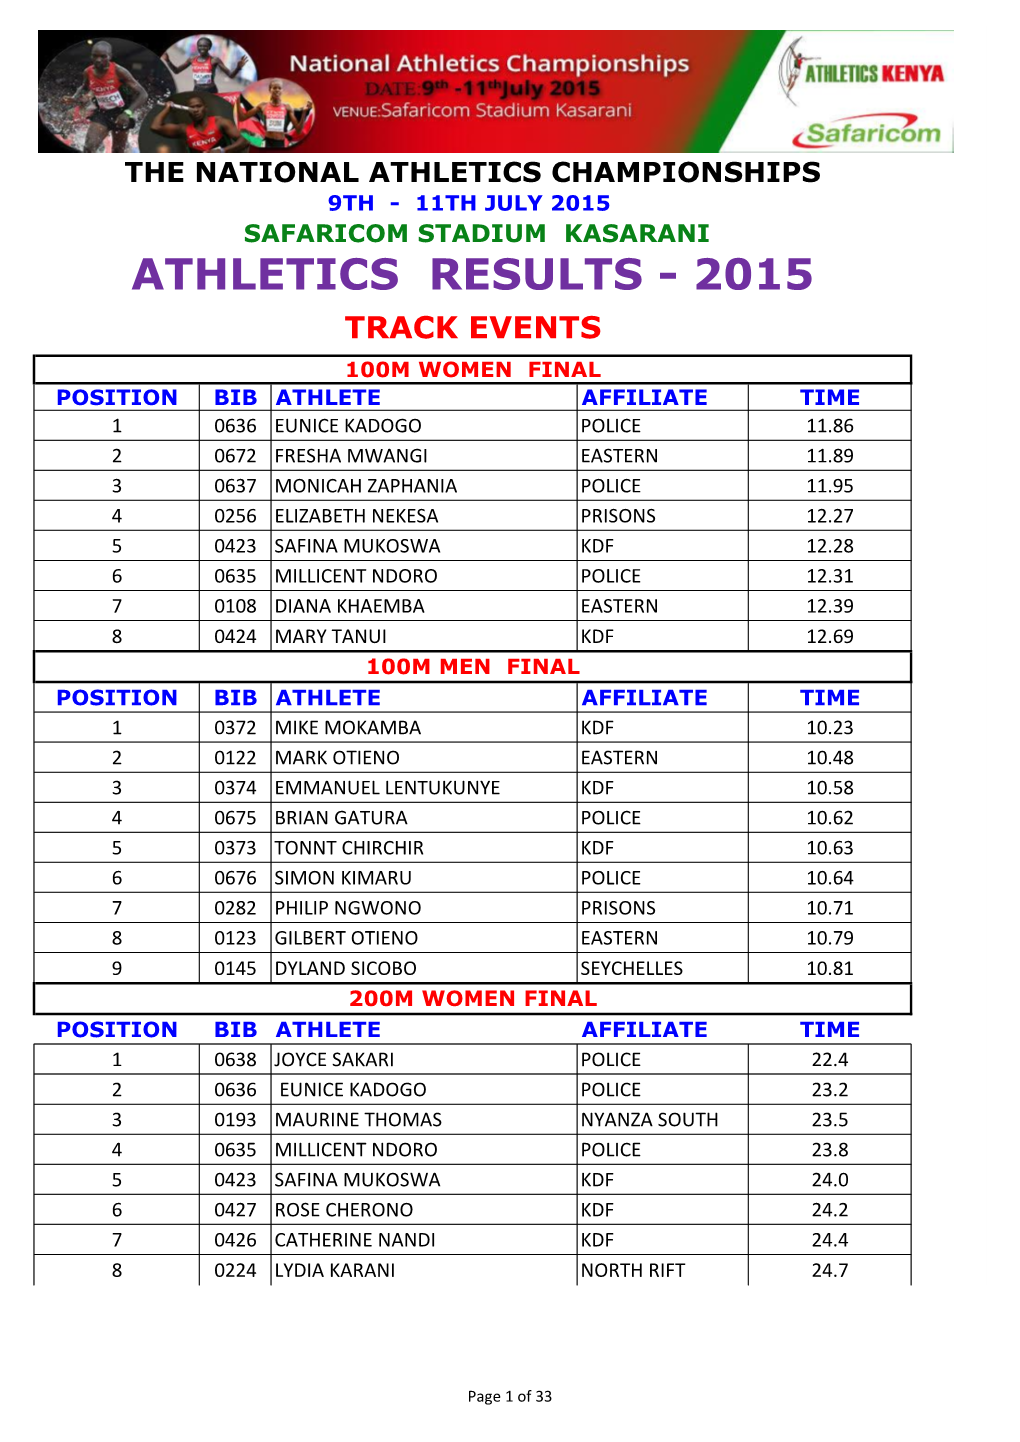 National Athletics Championship 2015 – at Safaricom Kasarani Stadium